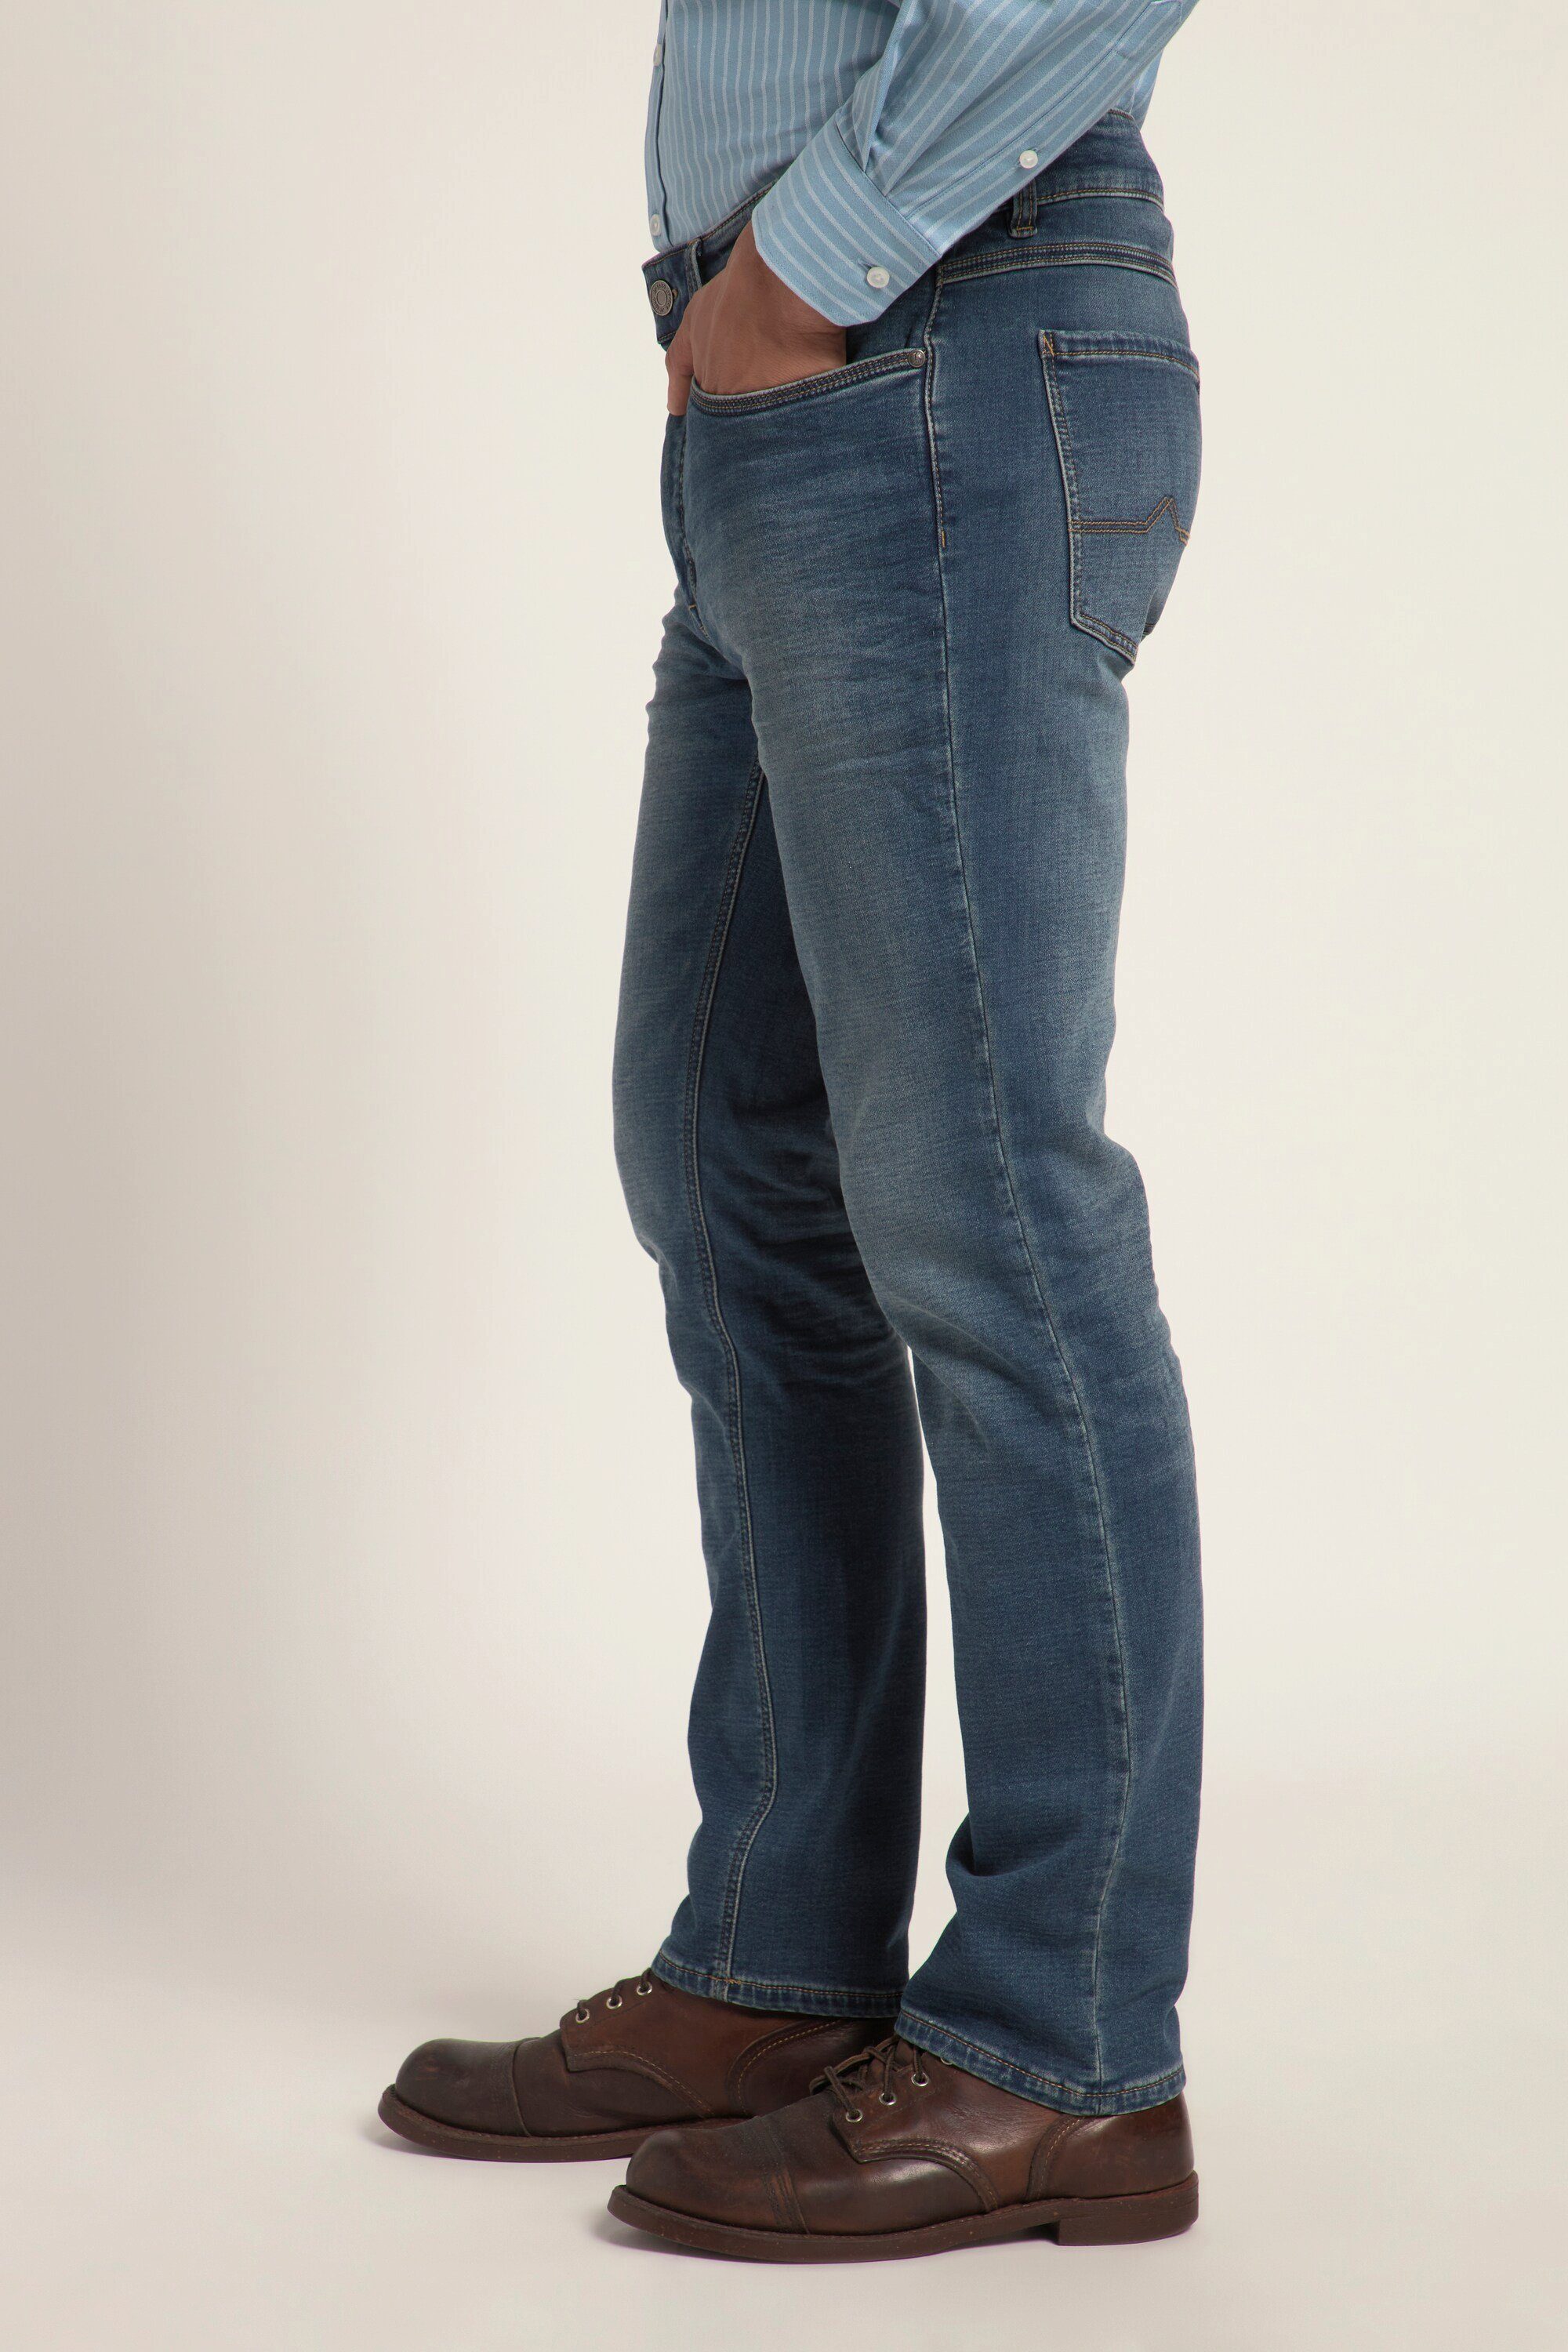 blue Cargohose Jeans Denim Straight JP1880 denim FLEXNAMIC® Fit 5-Pocket